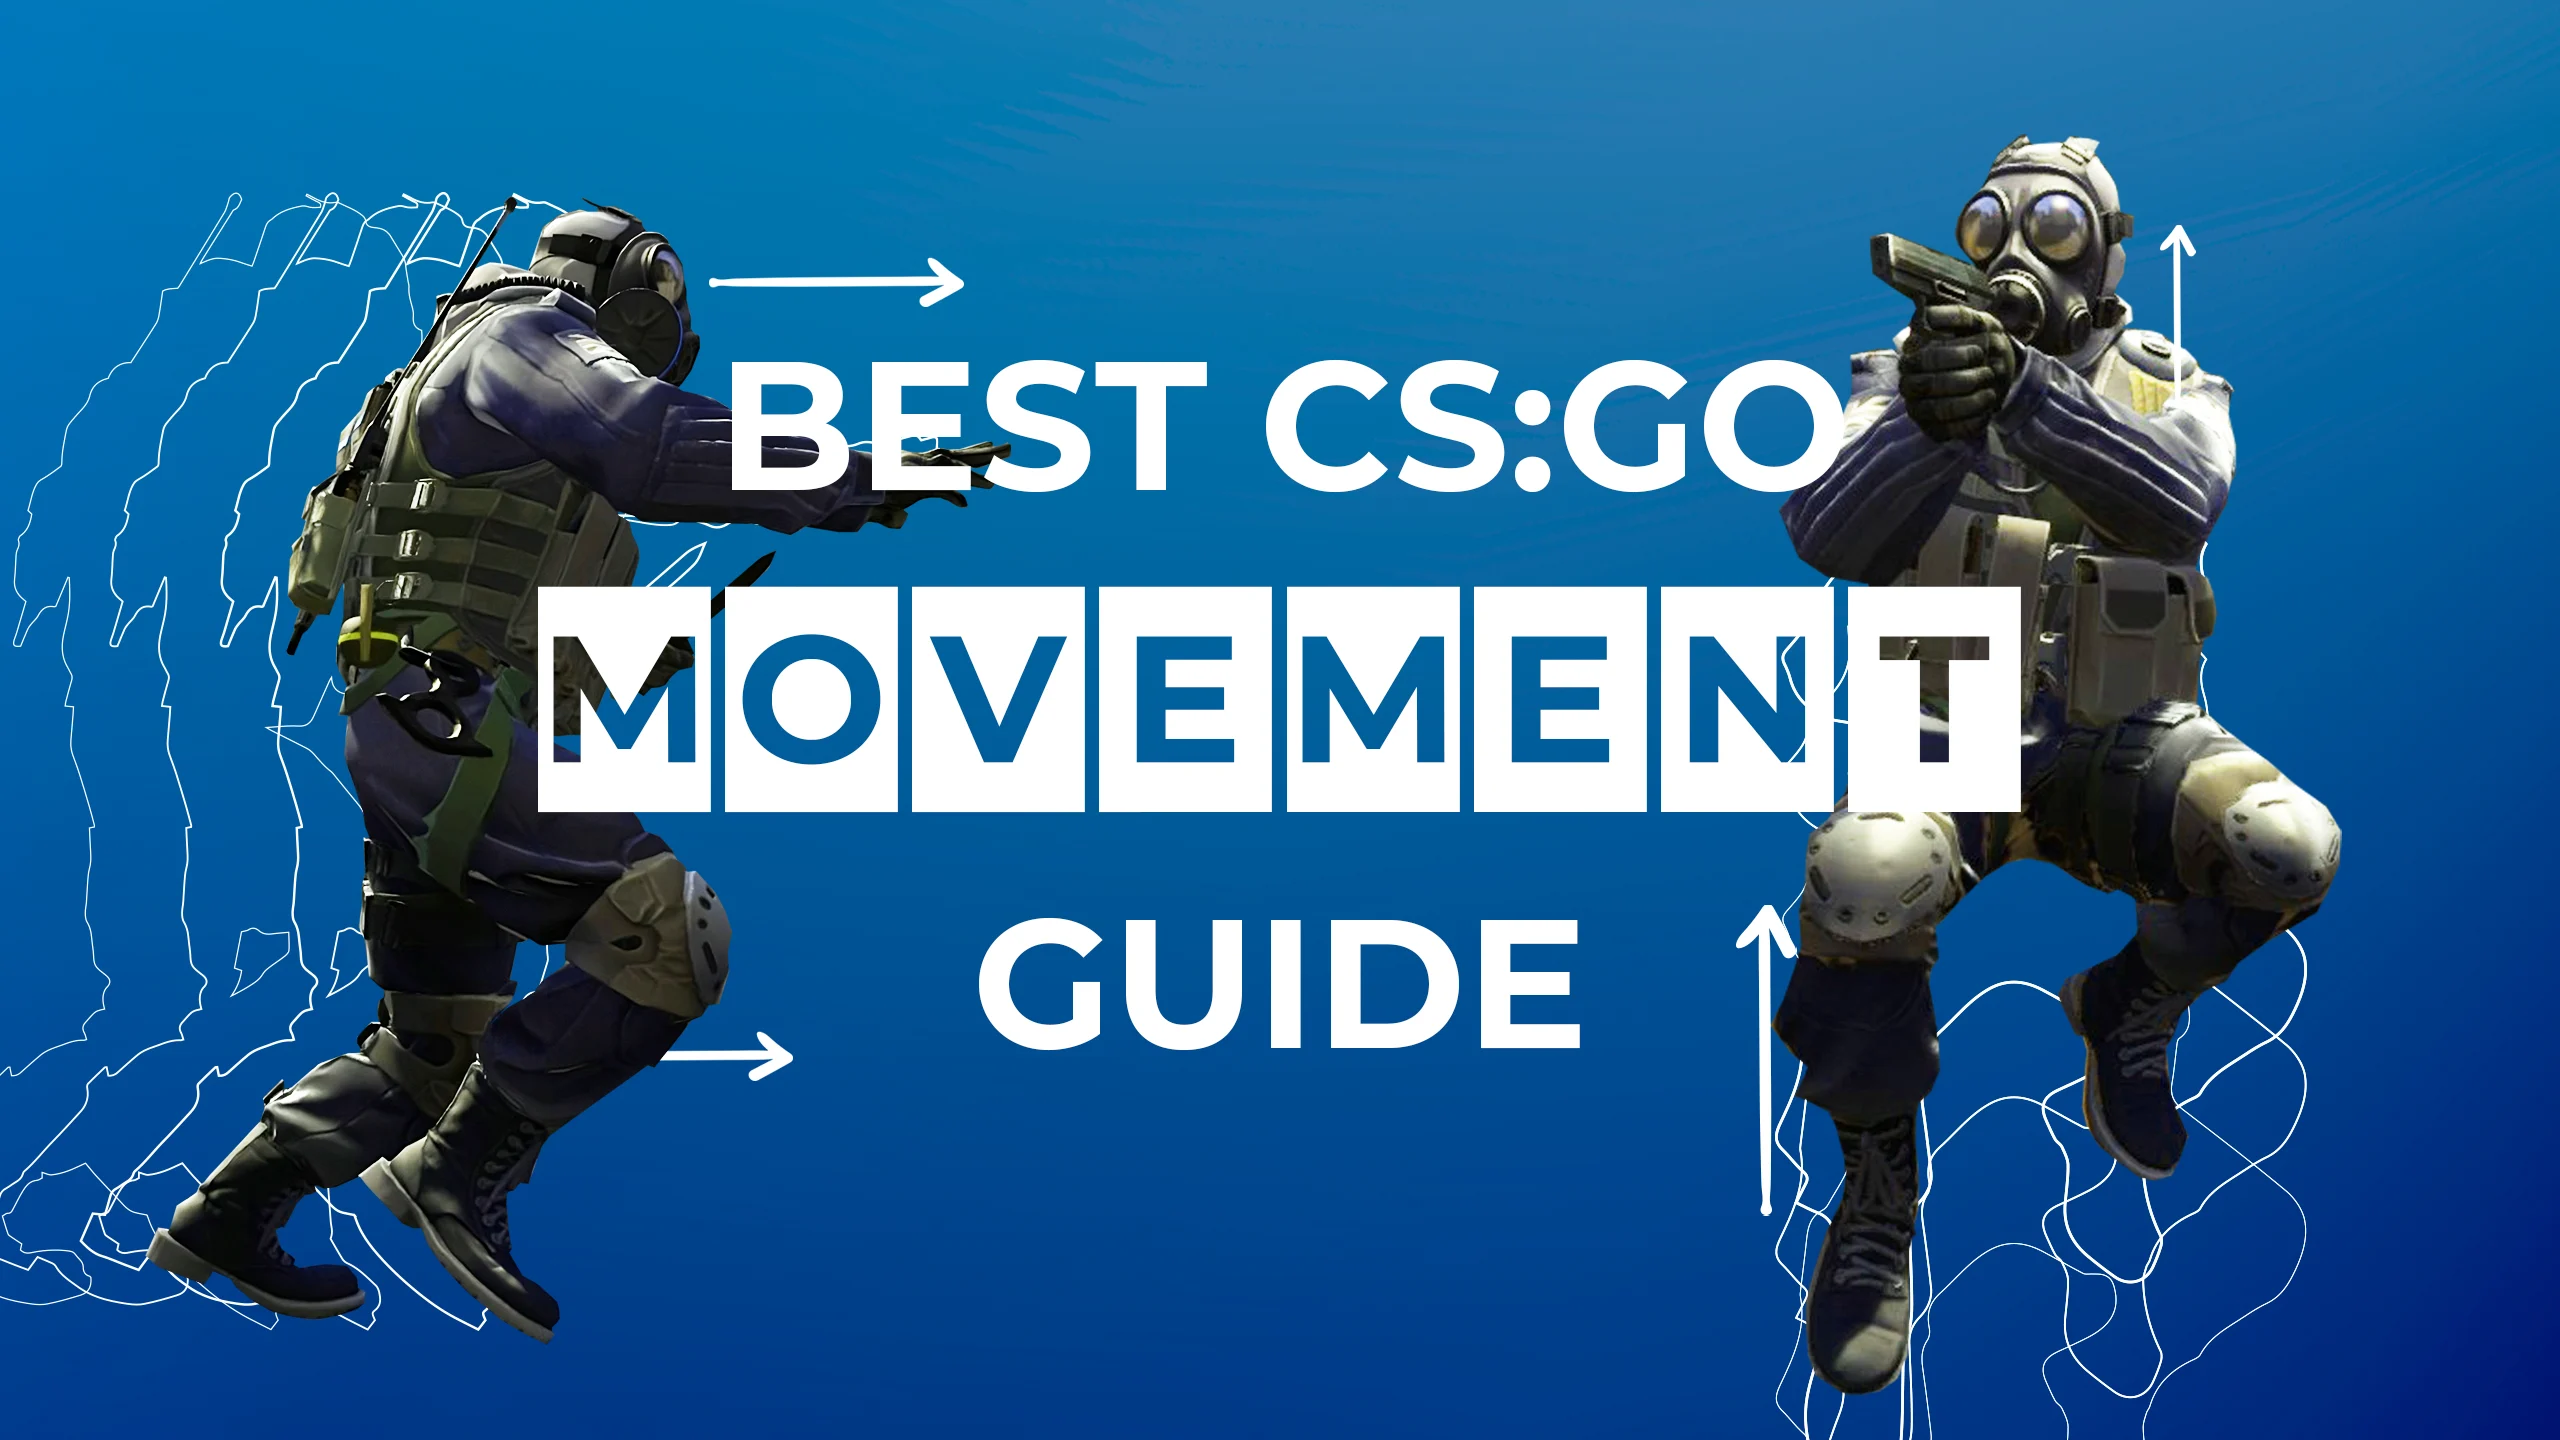 Best CS:GO Movement Guide